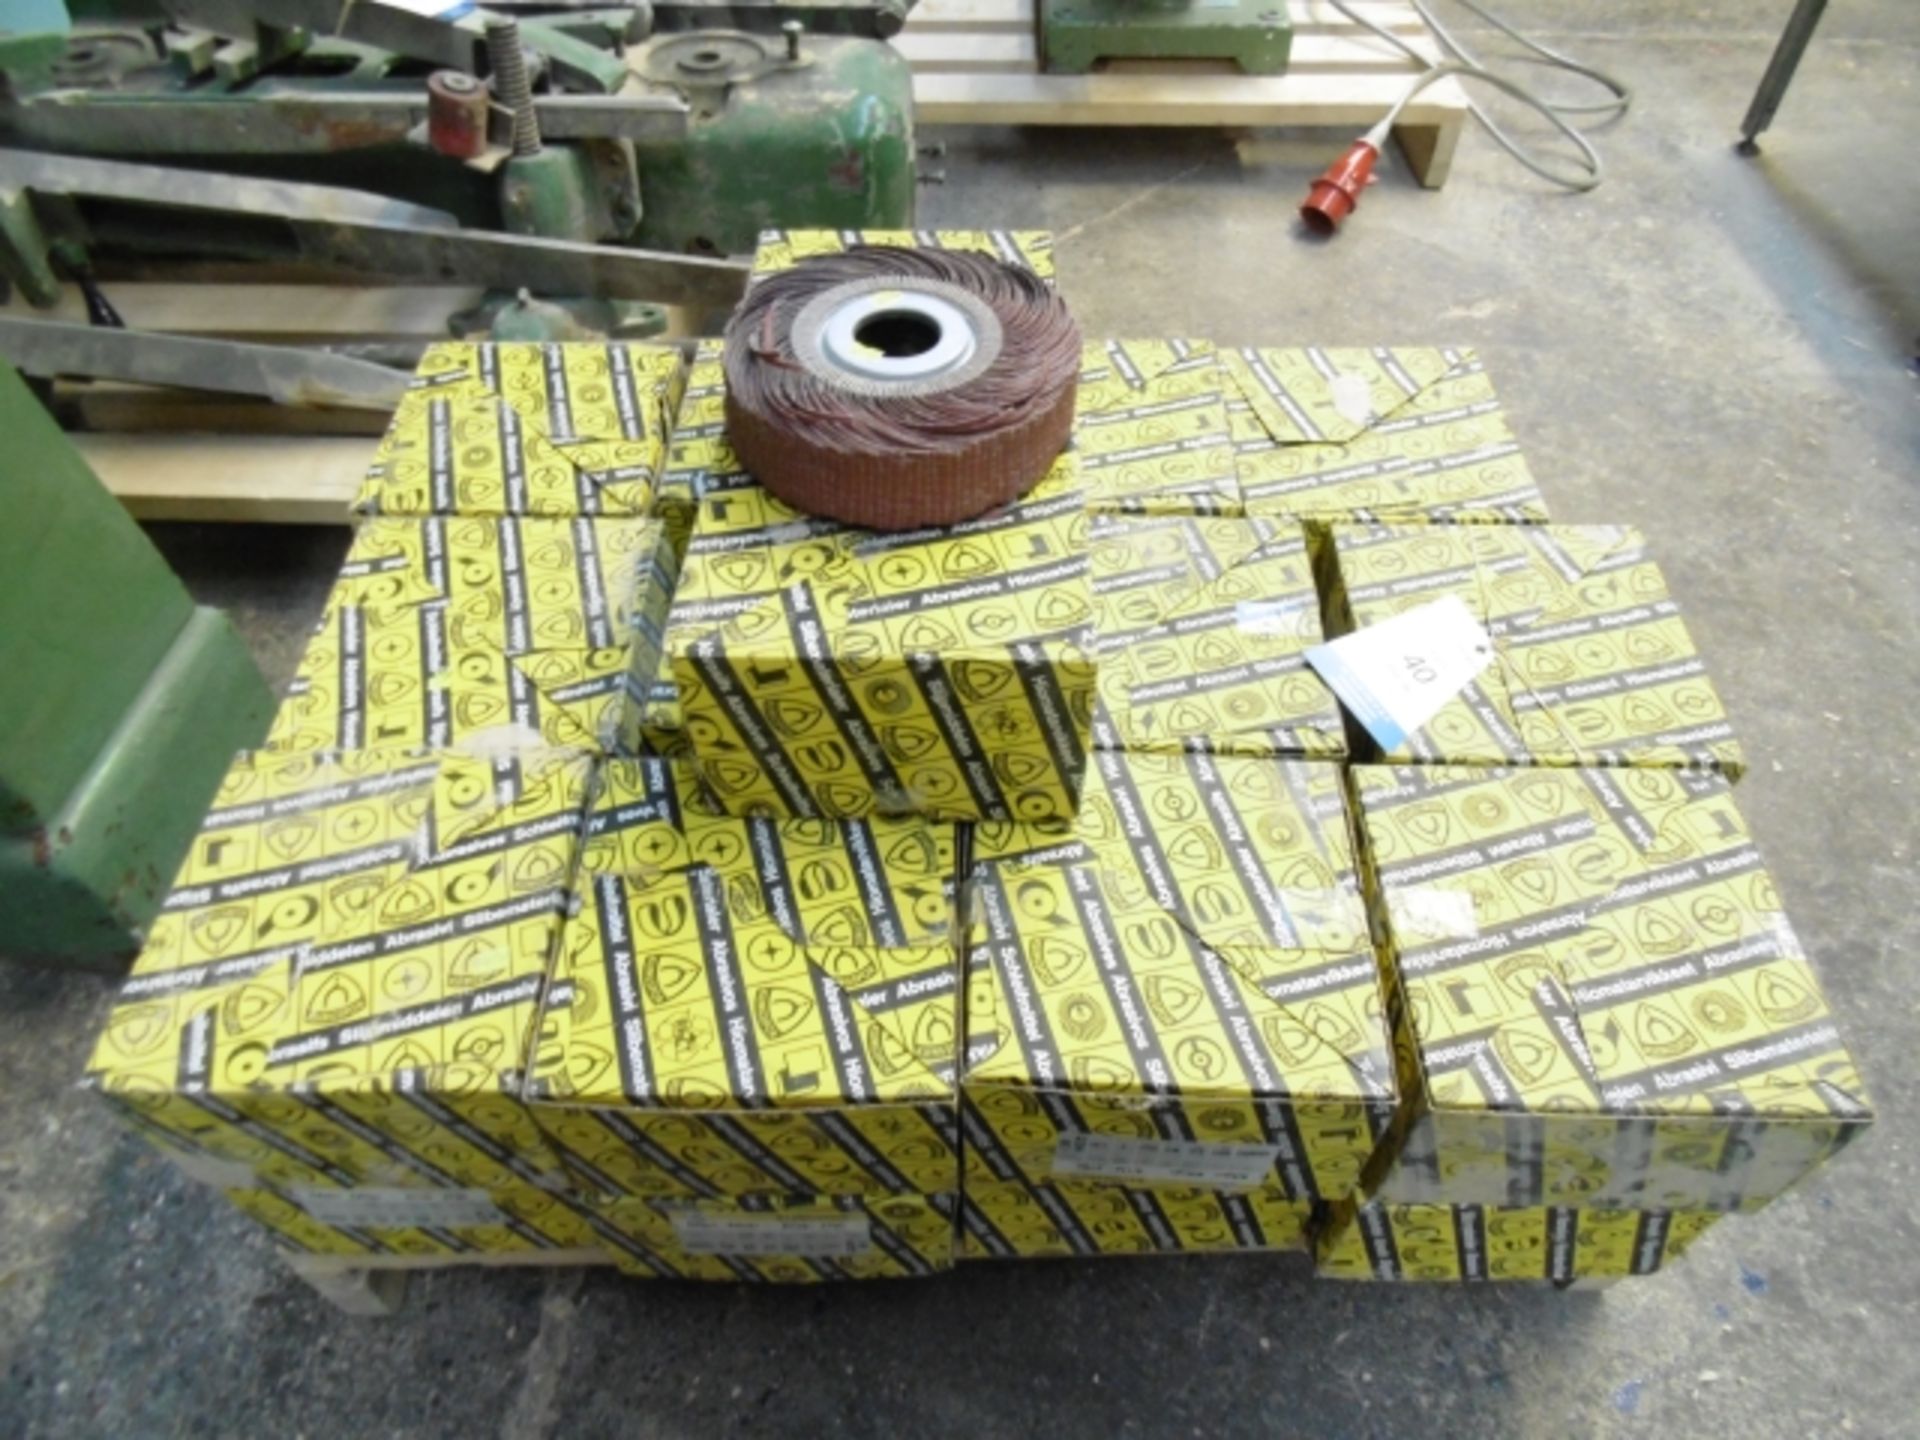 * 52 x Boxed/Unused Klingspor Abrasive Wheels; 80 Grit; 250mm diameter, 250mm thickness. Please note